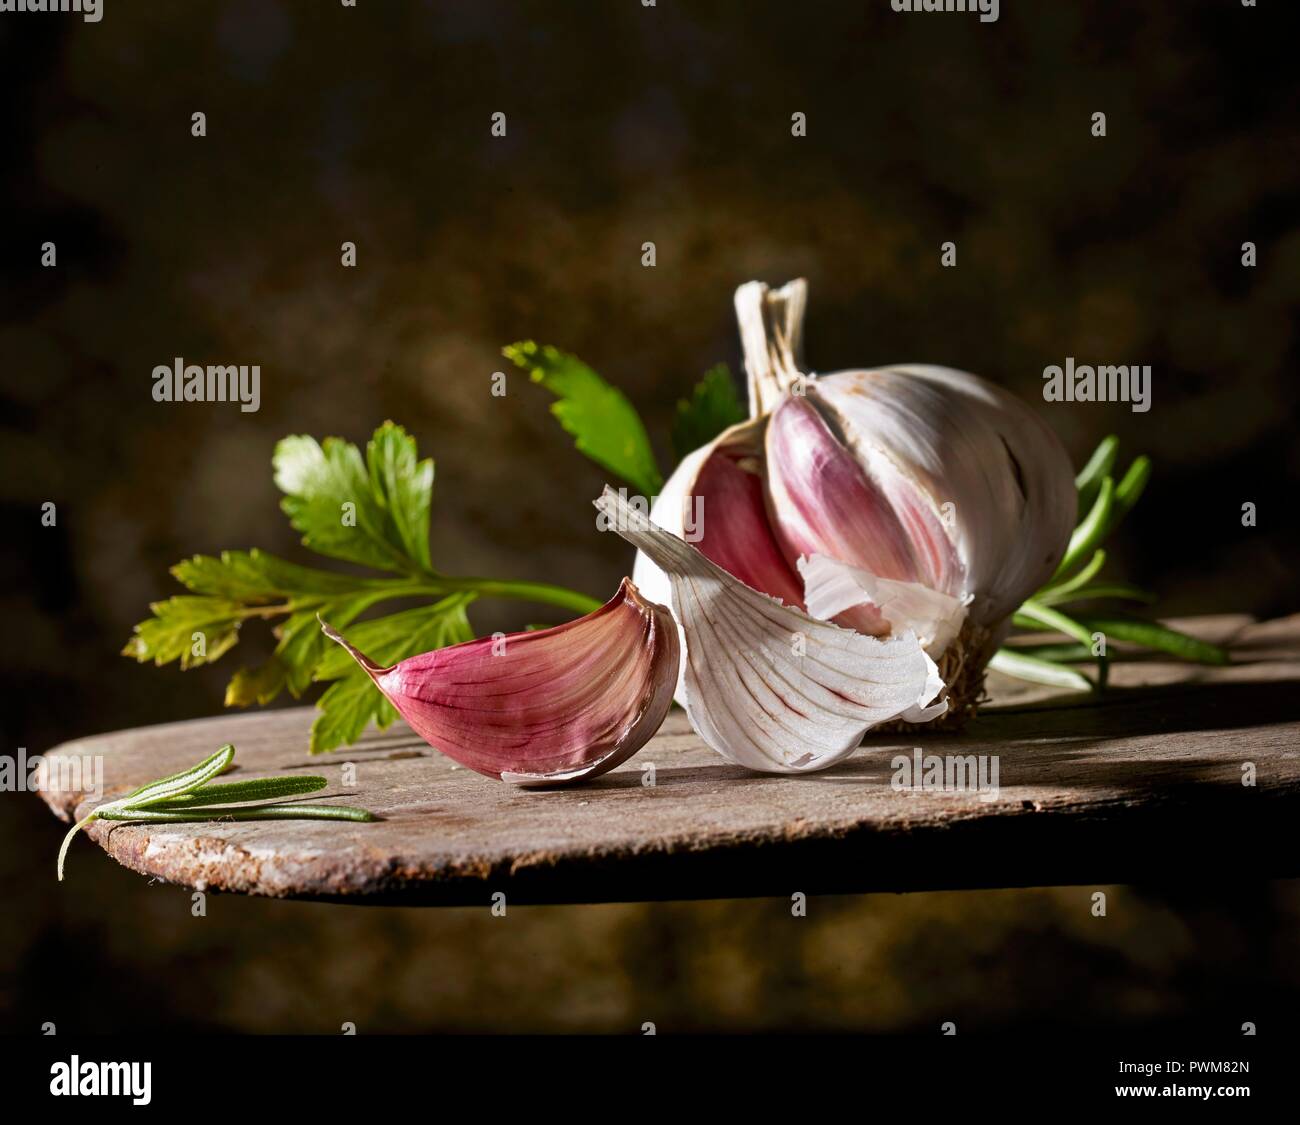 A garlic bulb and flat-leaf parsley on a wooden board Stock Photo